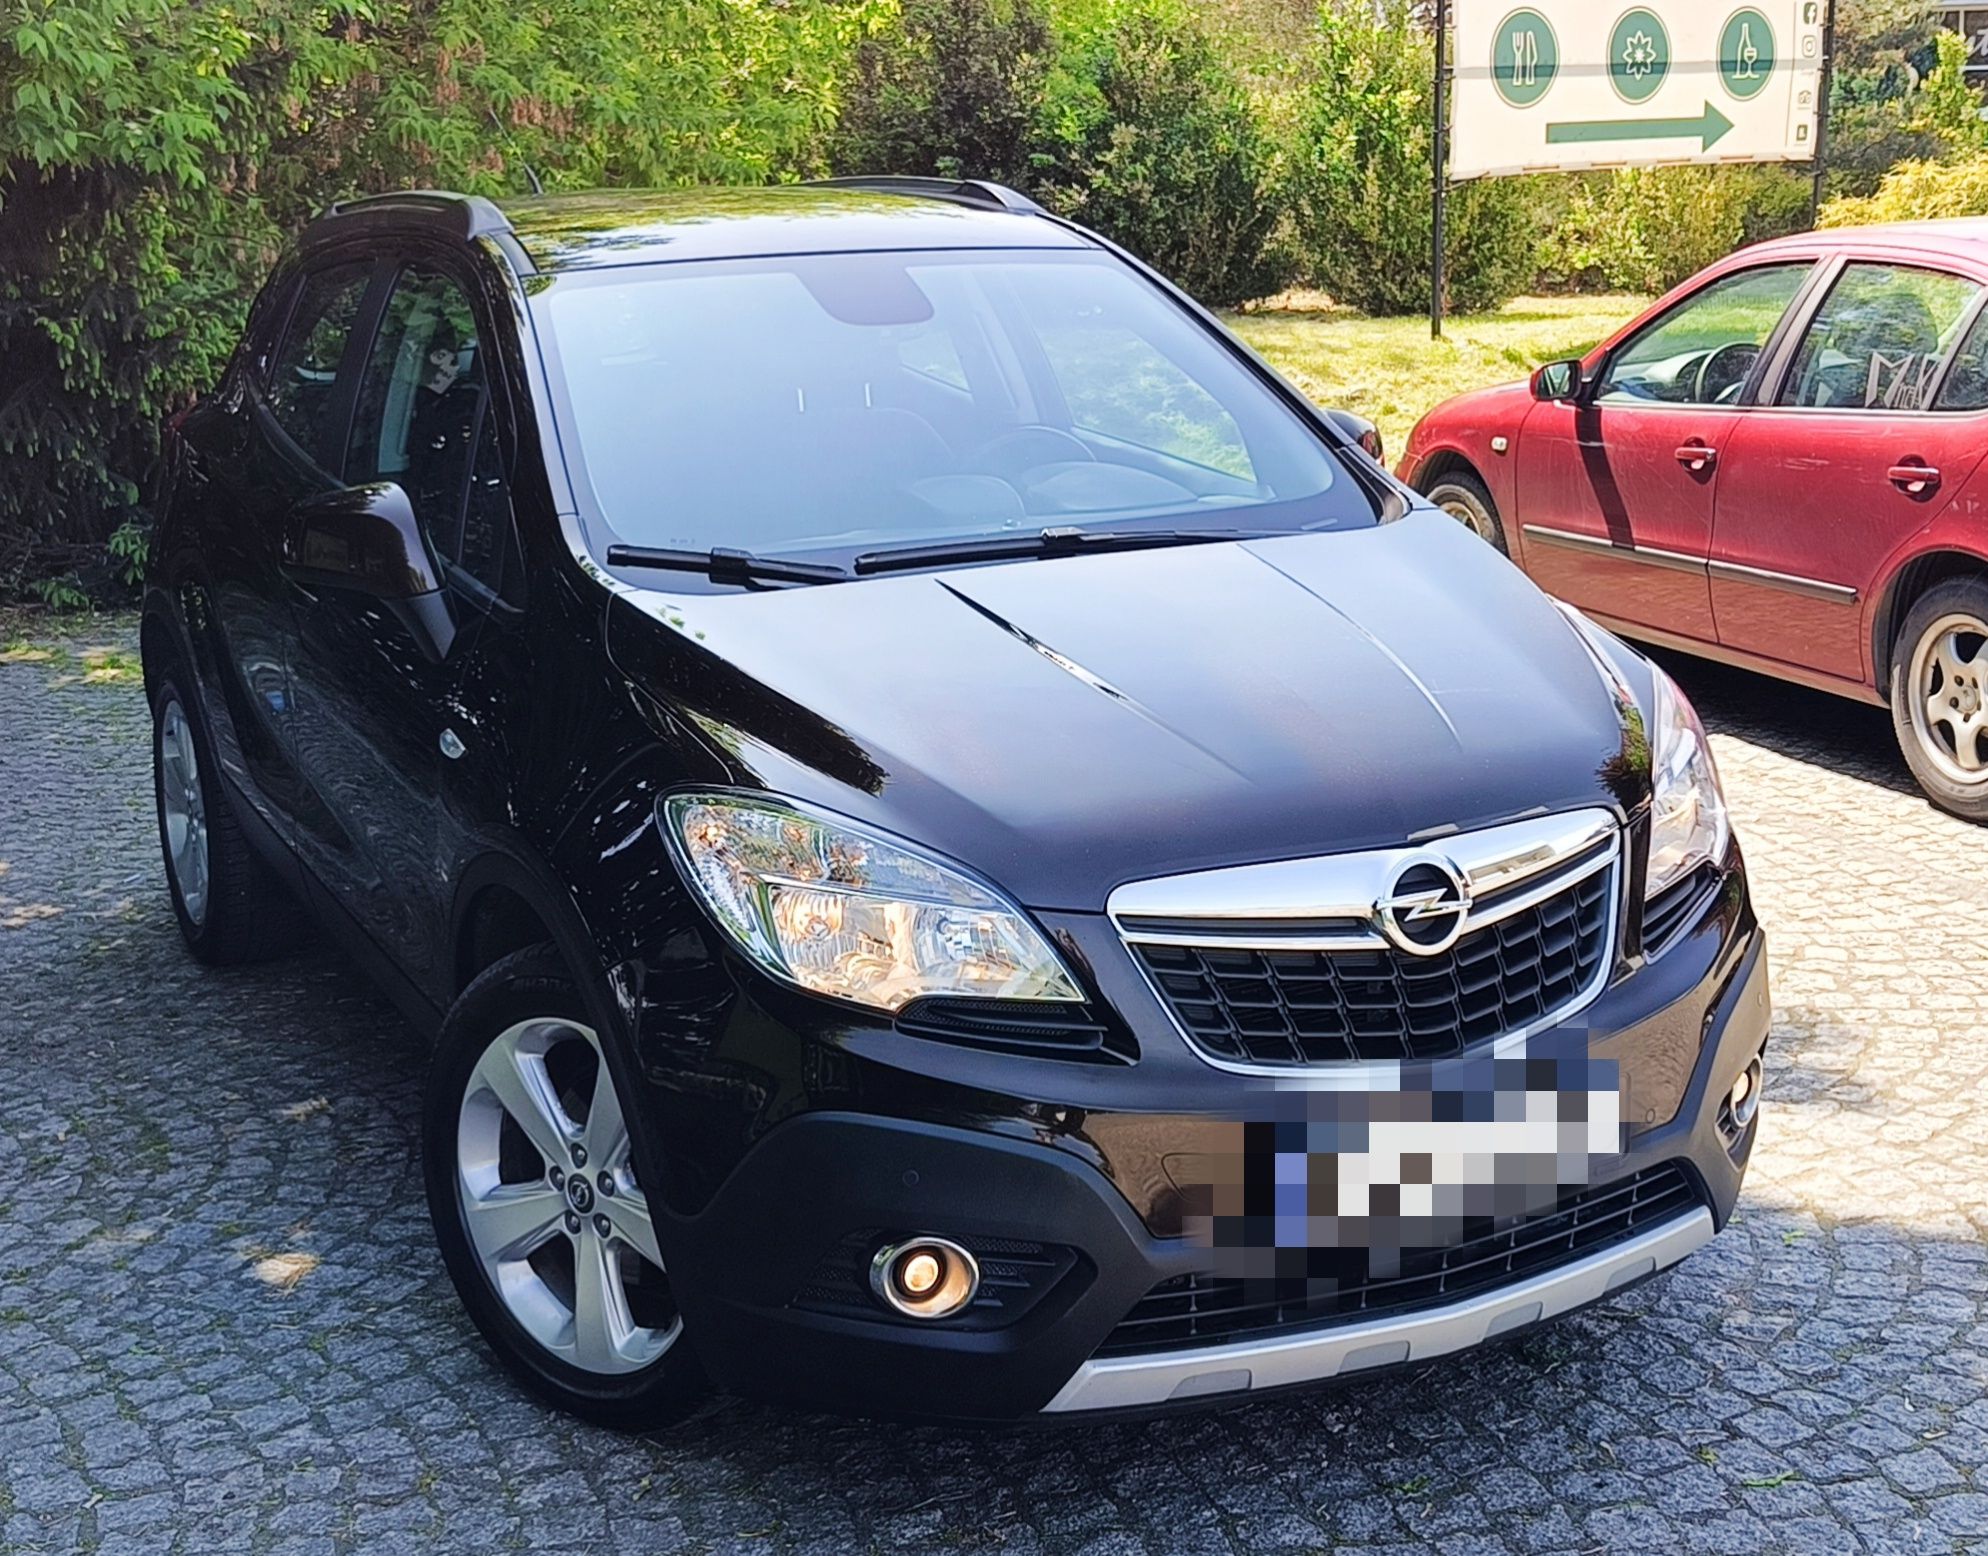 Opel mokka 4x4 Alu Tempomat hak 2014r przebieg 109 tyś